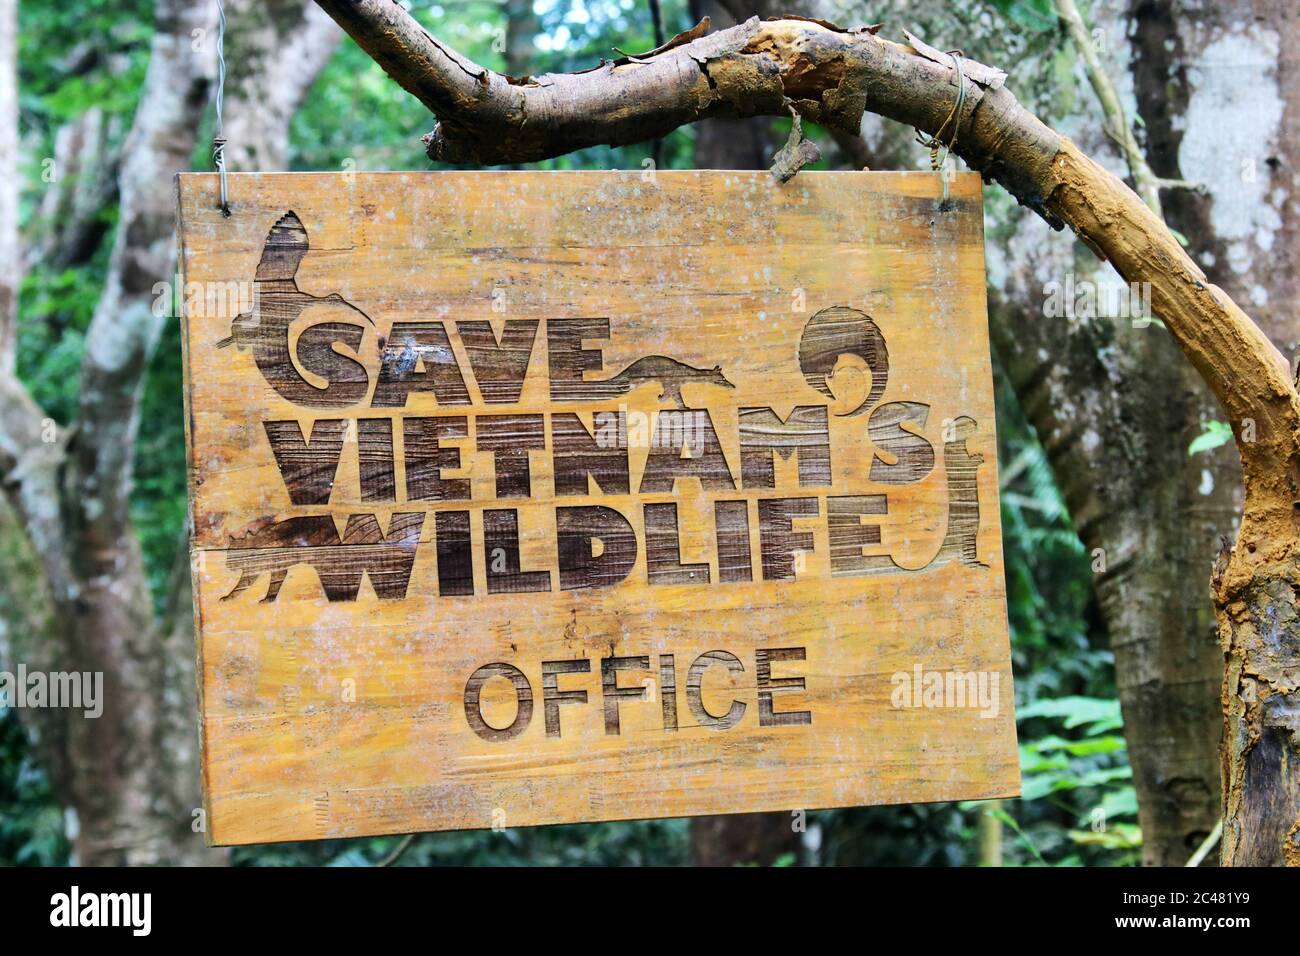 Cúc Phương National Park Vietnam 22. Oktober 2018: Das Schild von Save Vietnams Wildlife Office. Stockfoto